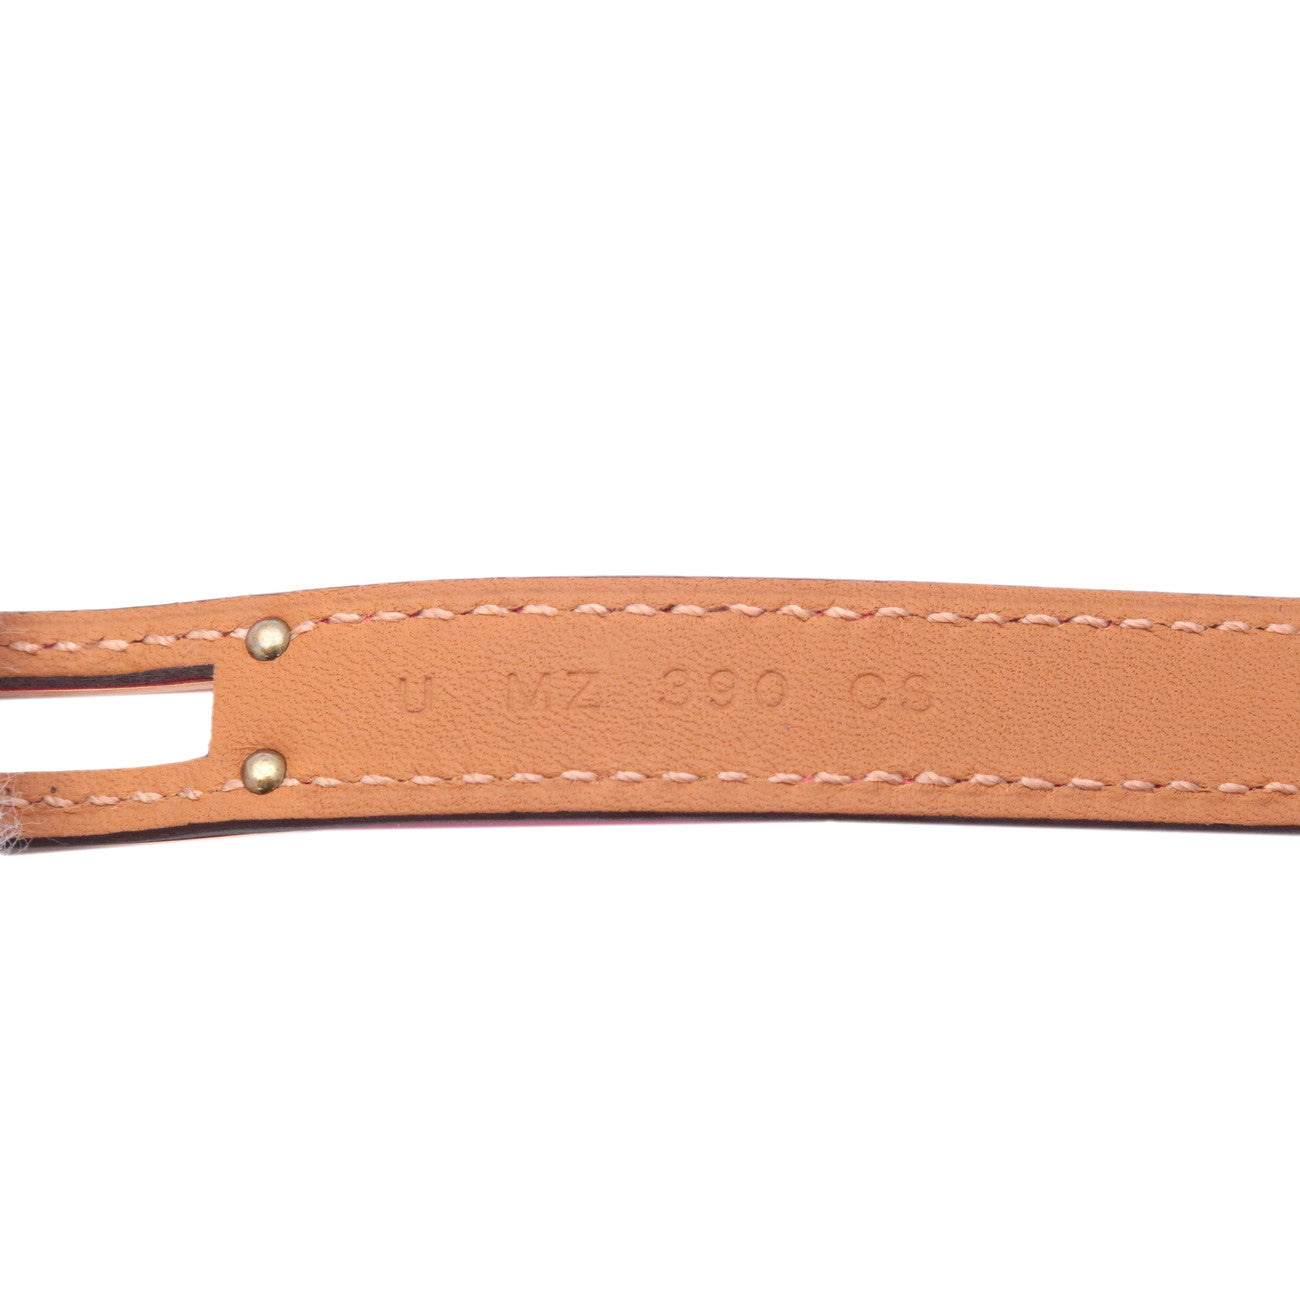 HERMES Kelly Bracelet Double Tour Leather Bracelet T2 Pink